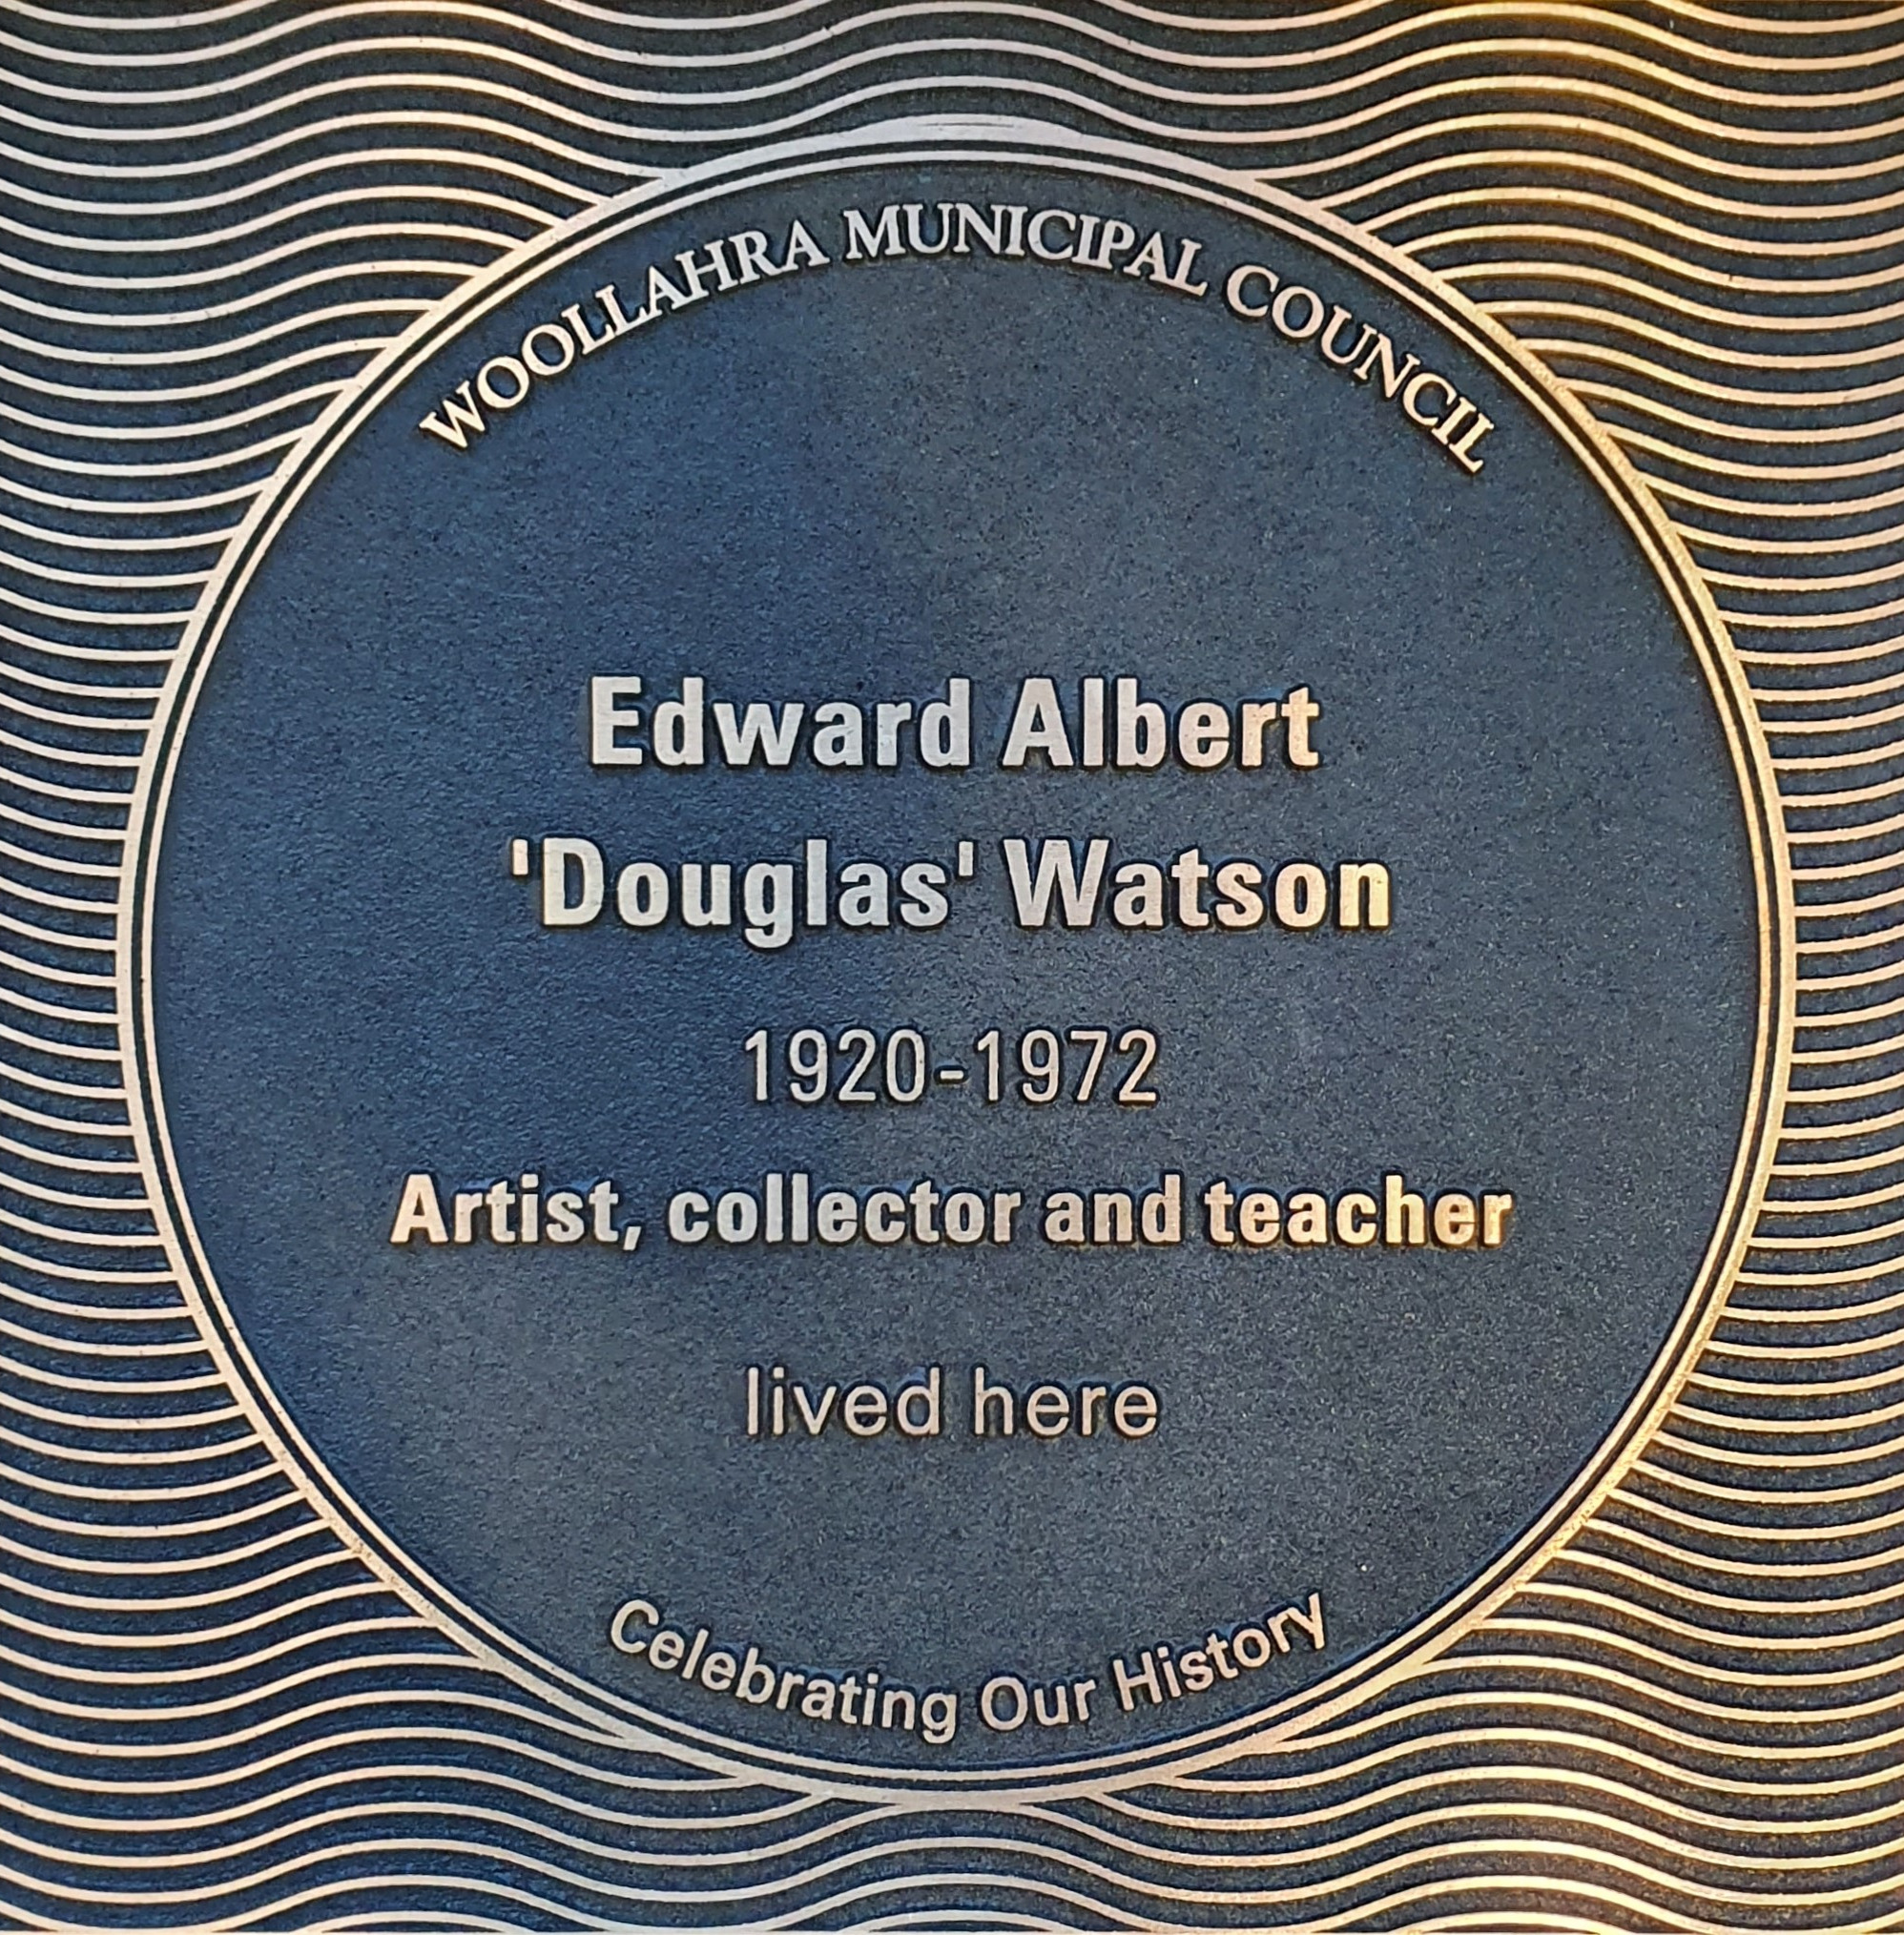 Edward Albert 'Douglas' Watson plaque